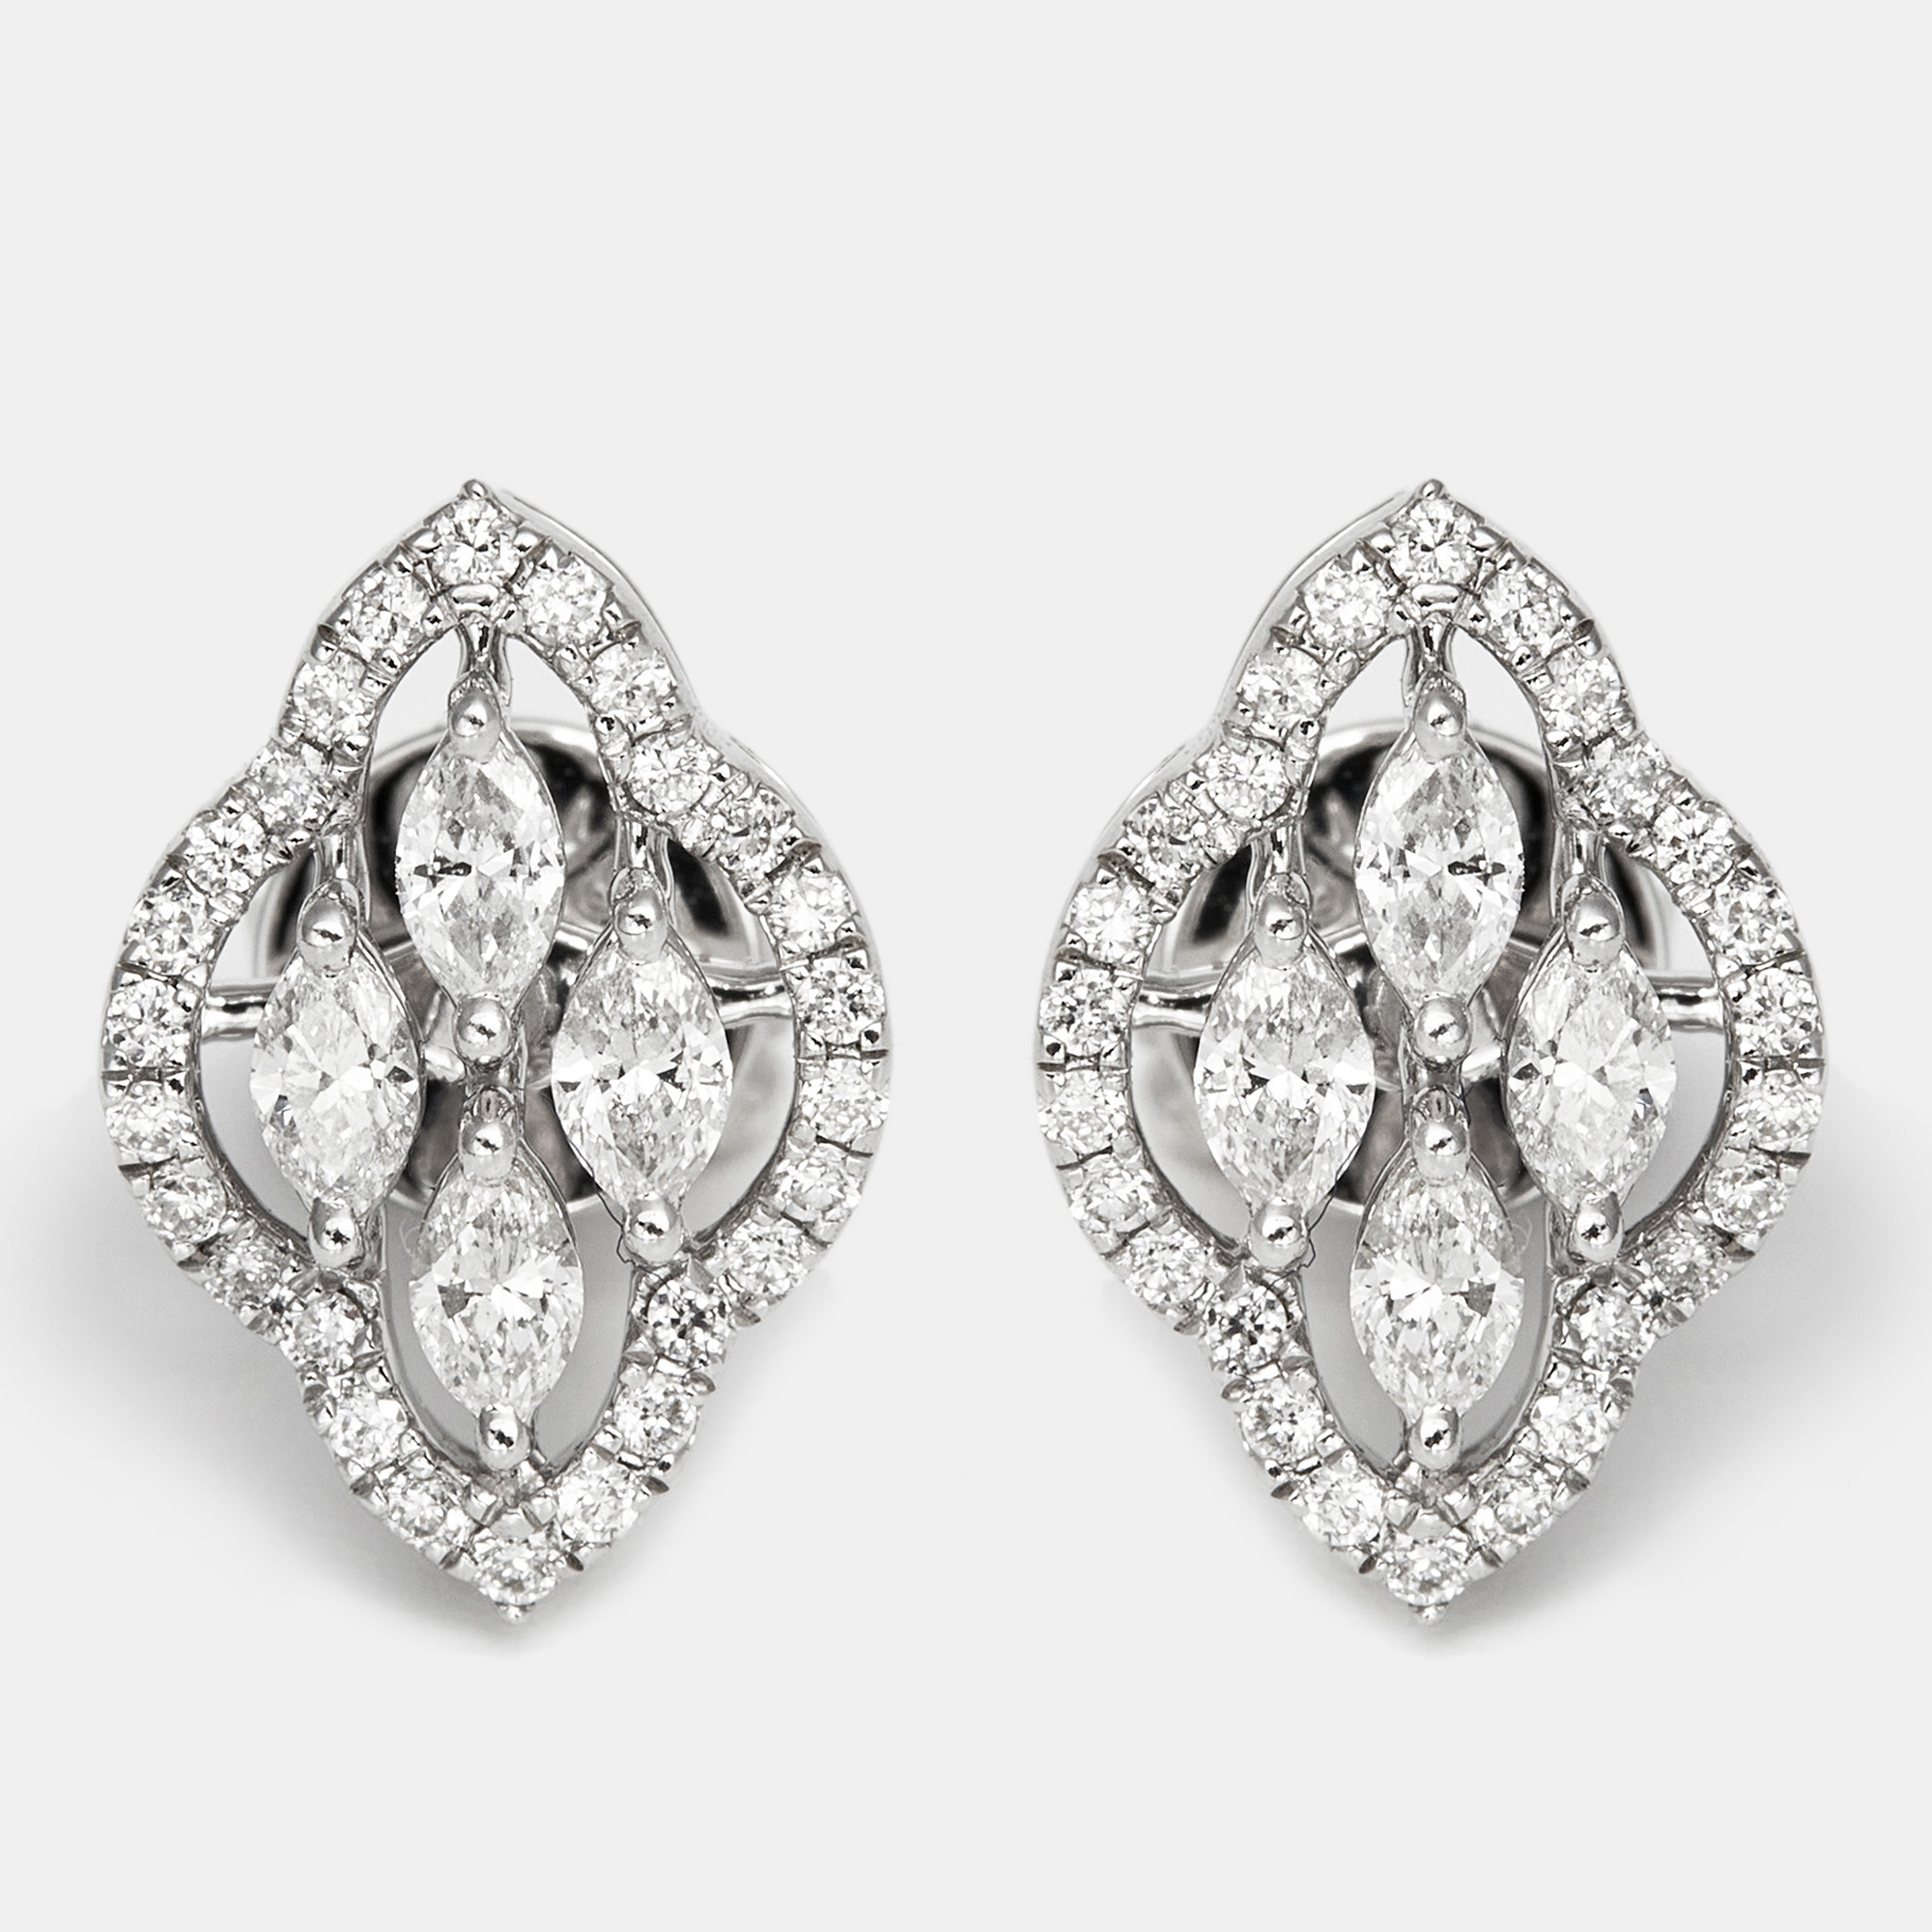 The diamond edit dazzling diamond 0.53 ct 18k white gold stud earrings